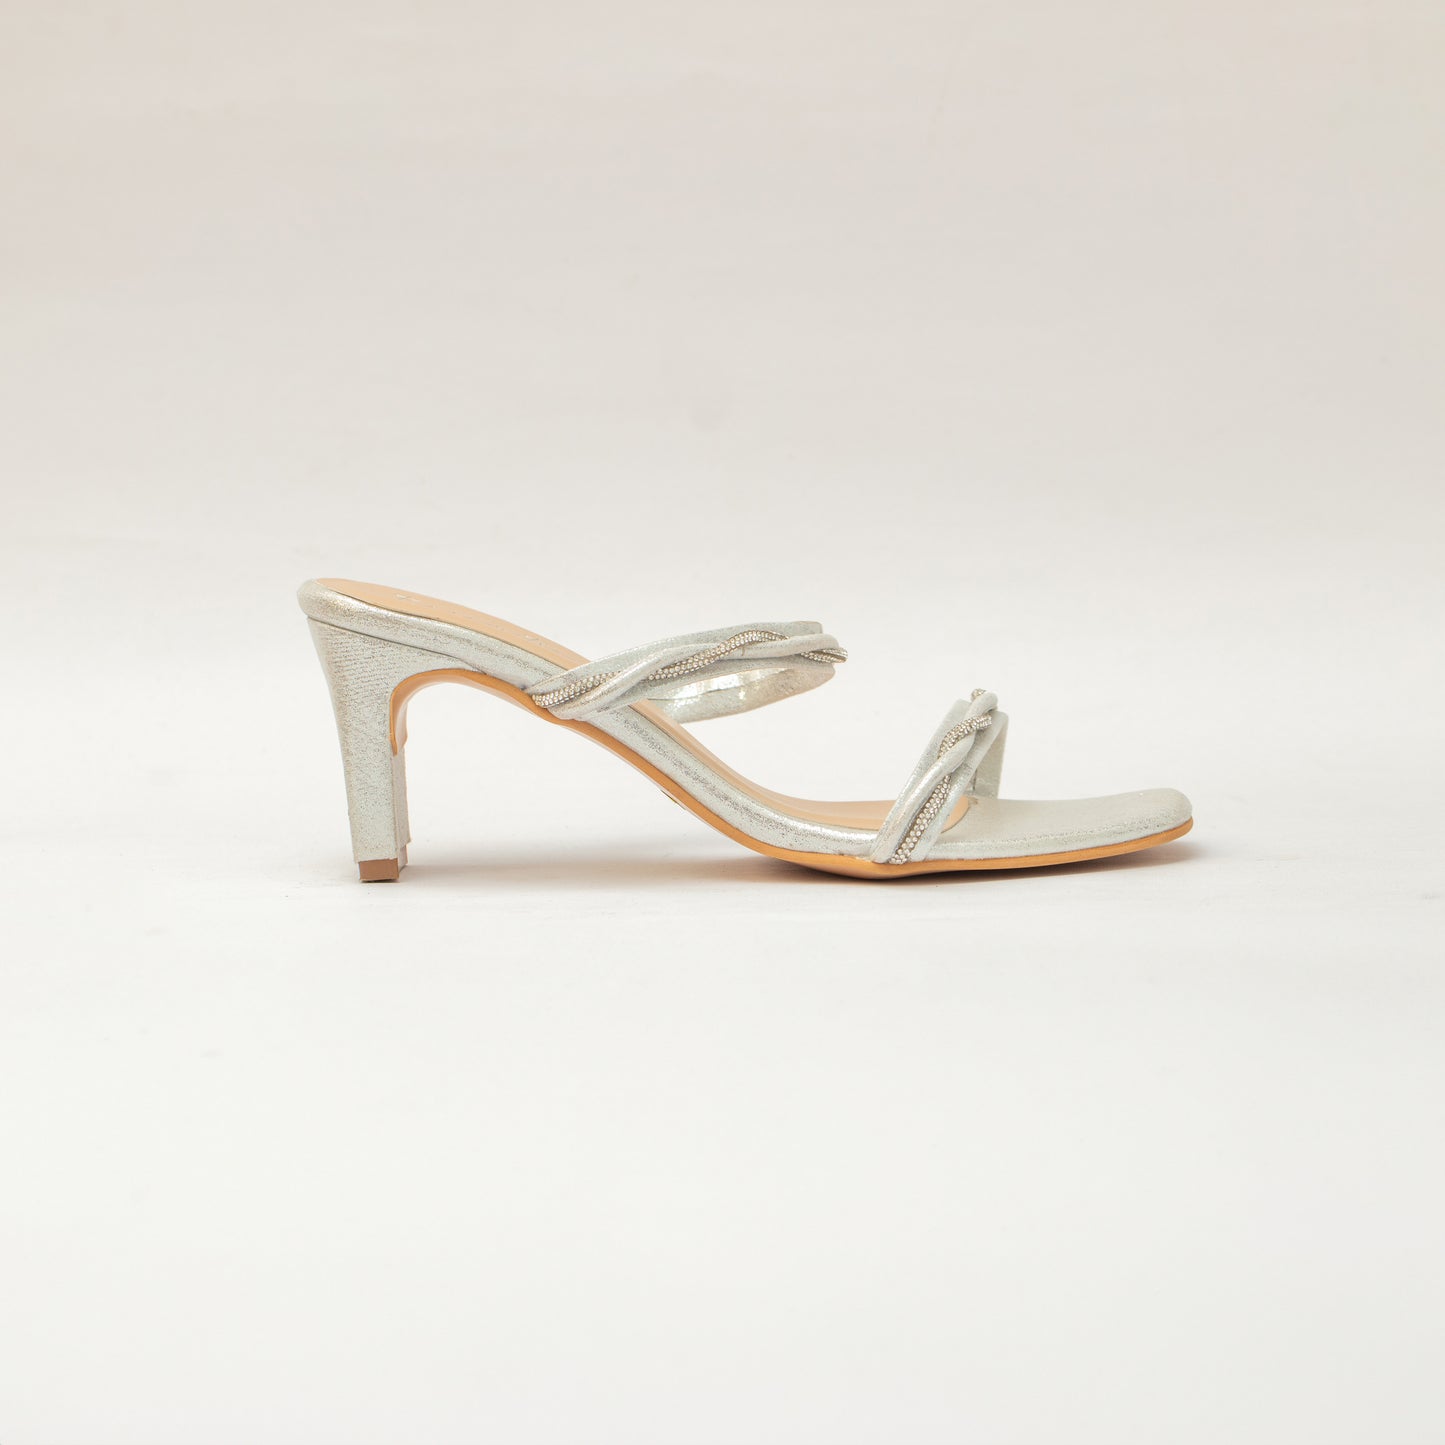 Electric silver heels